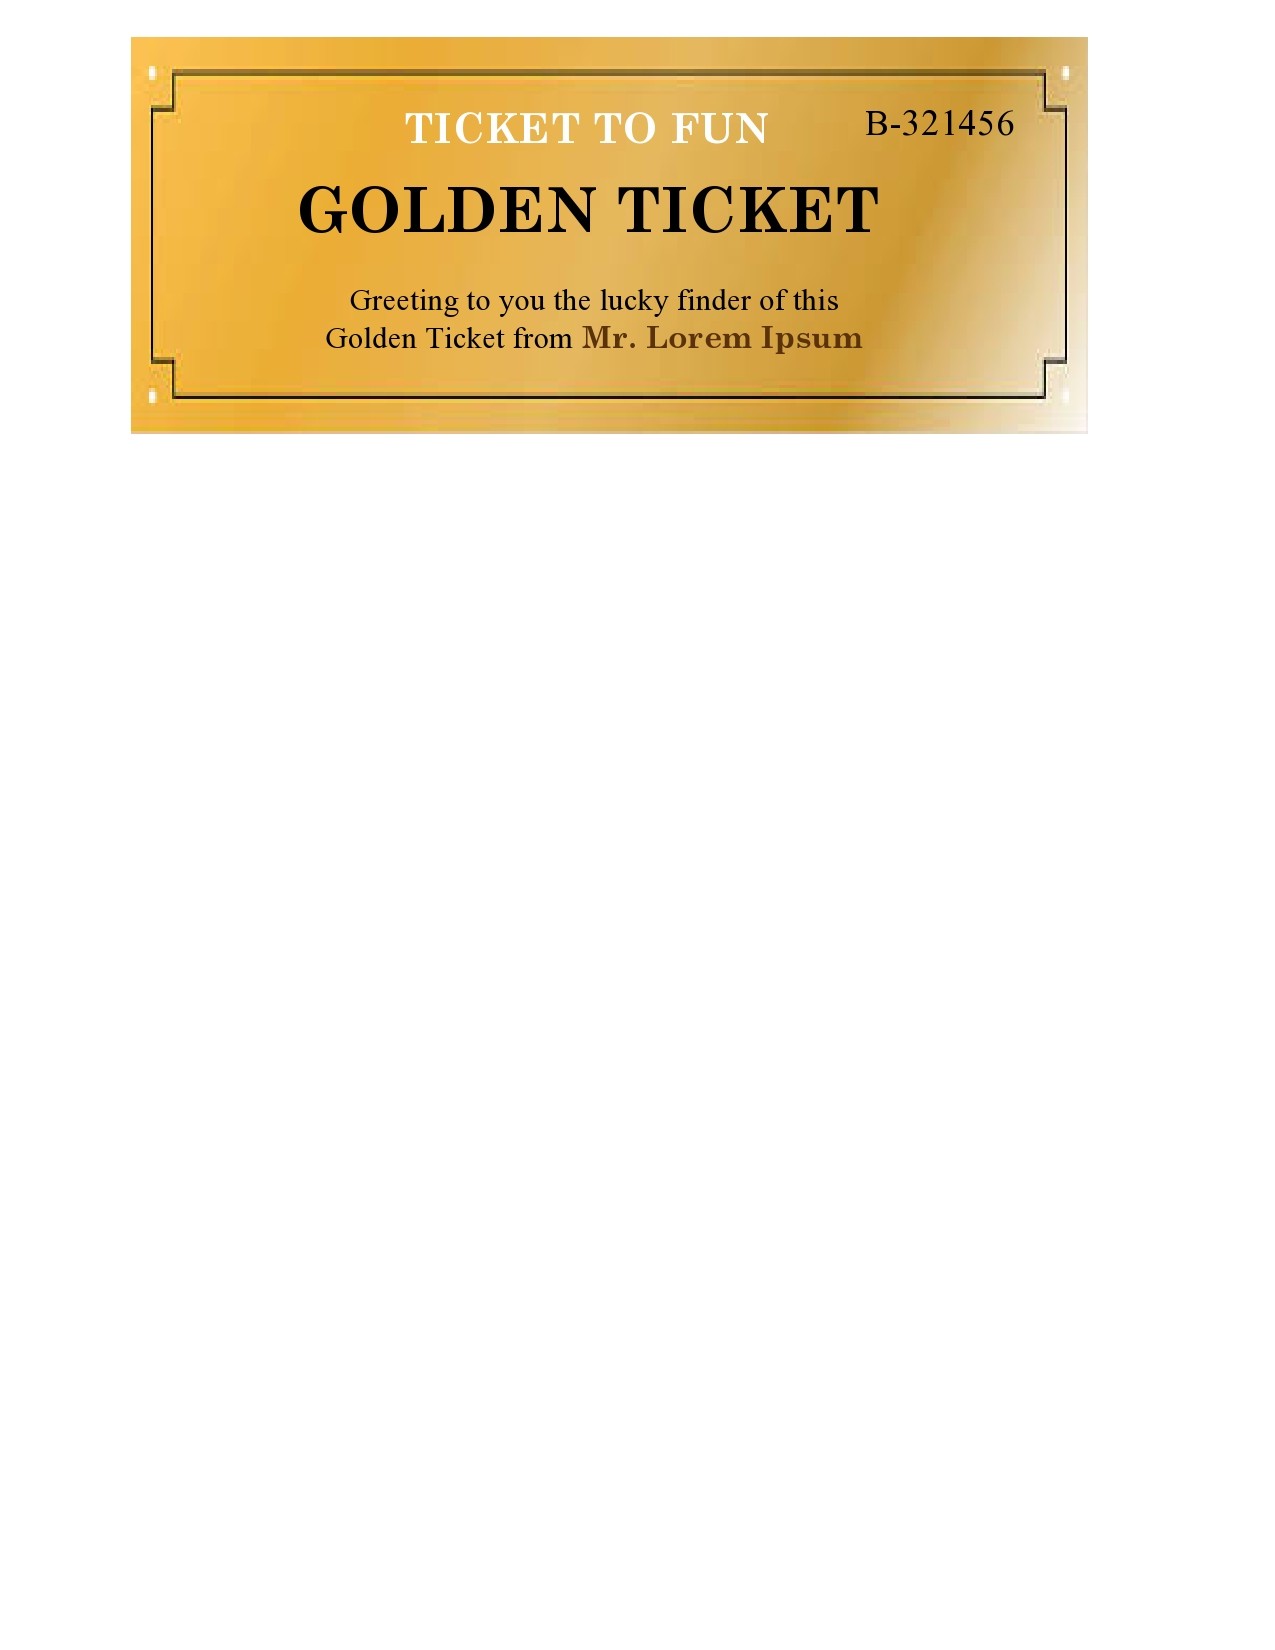 Free golden ticket template 13